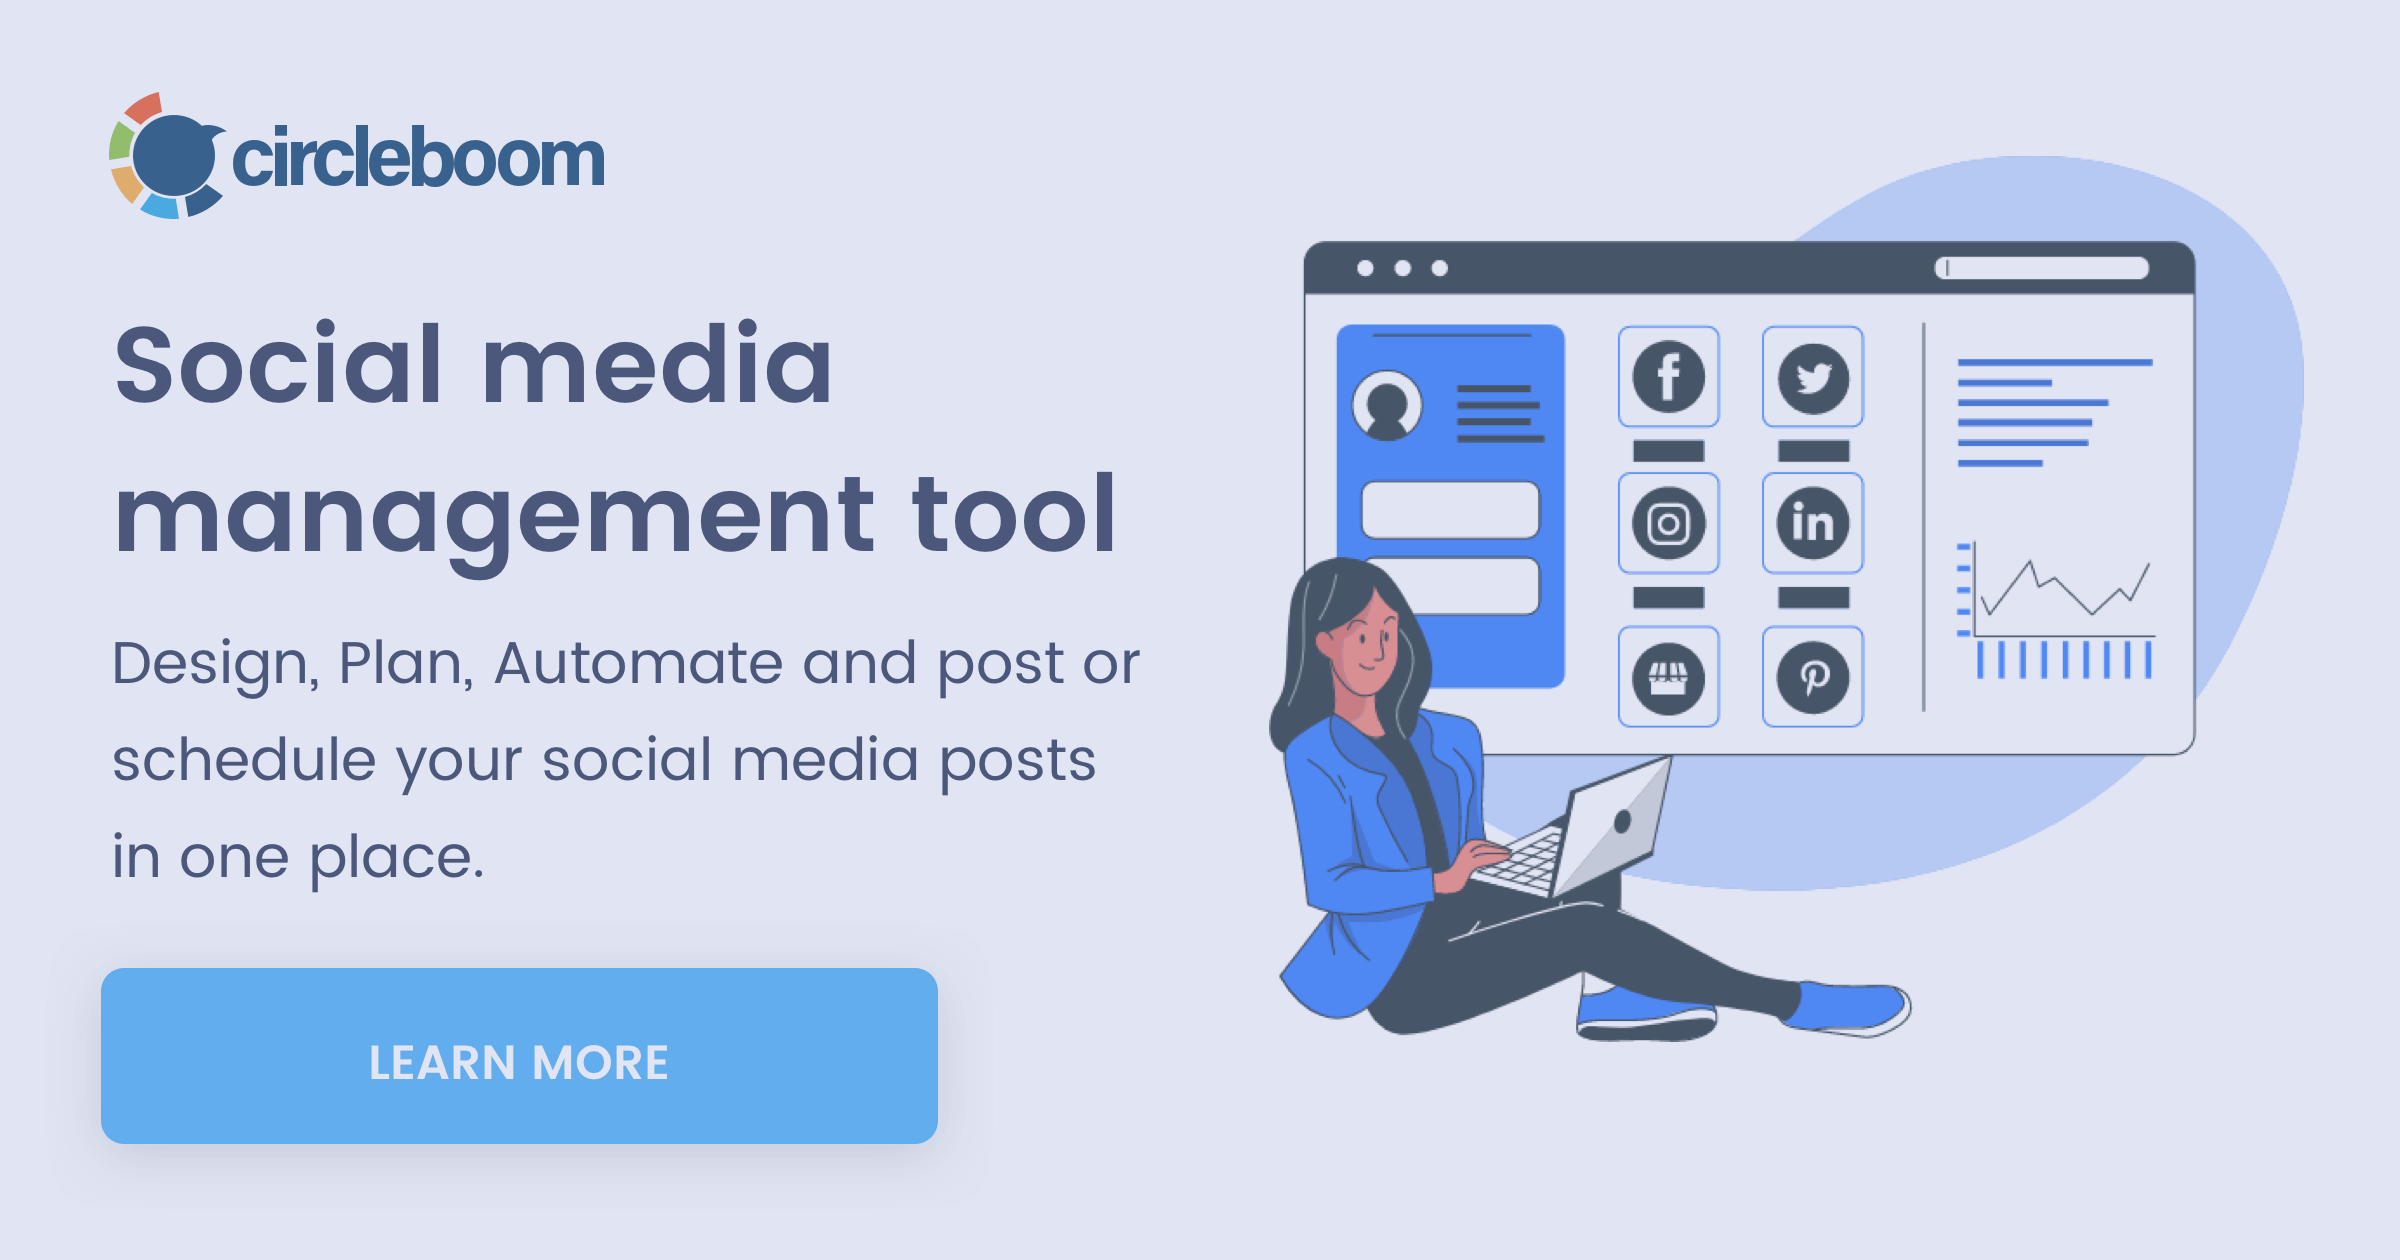 social media management tool - learn more